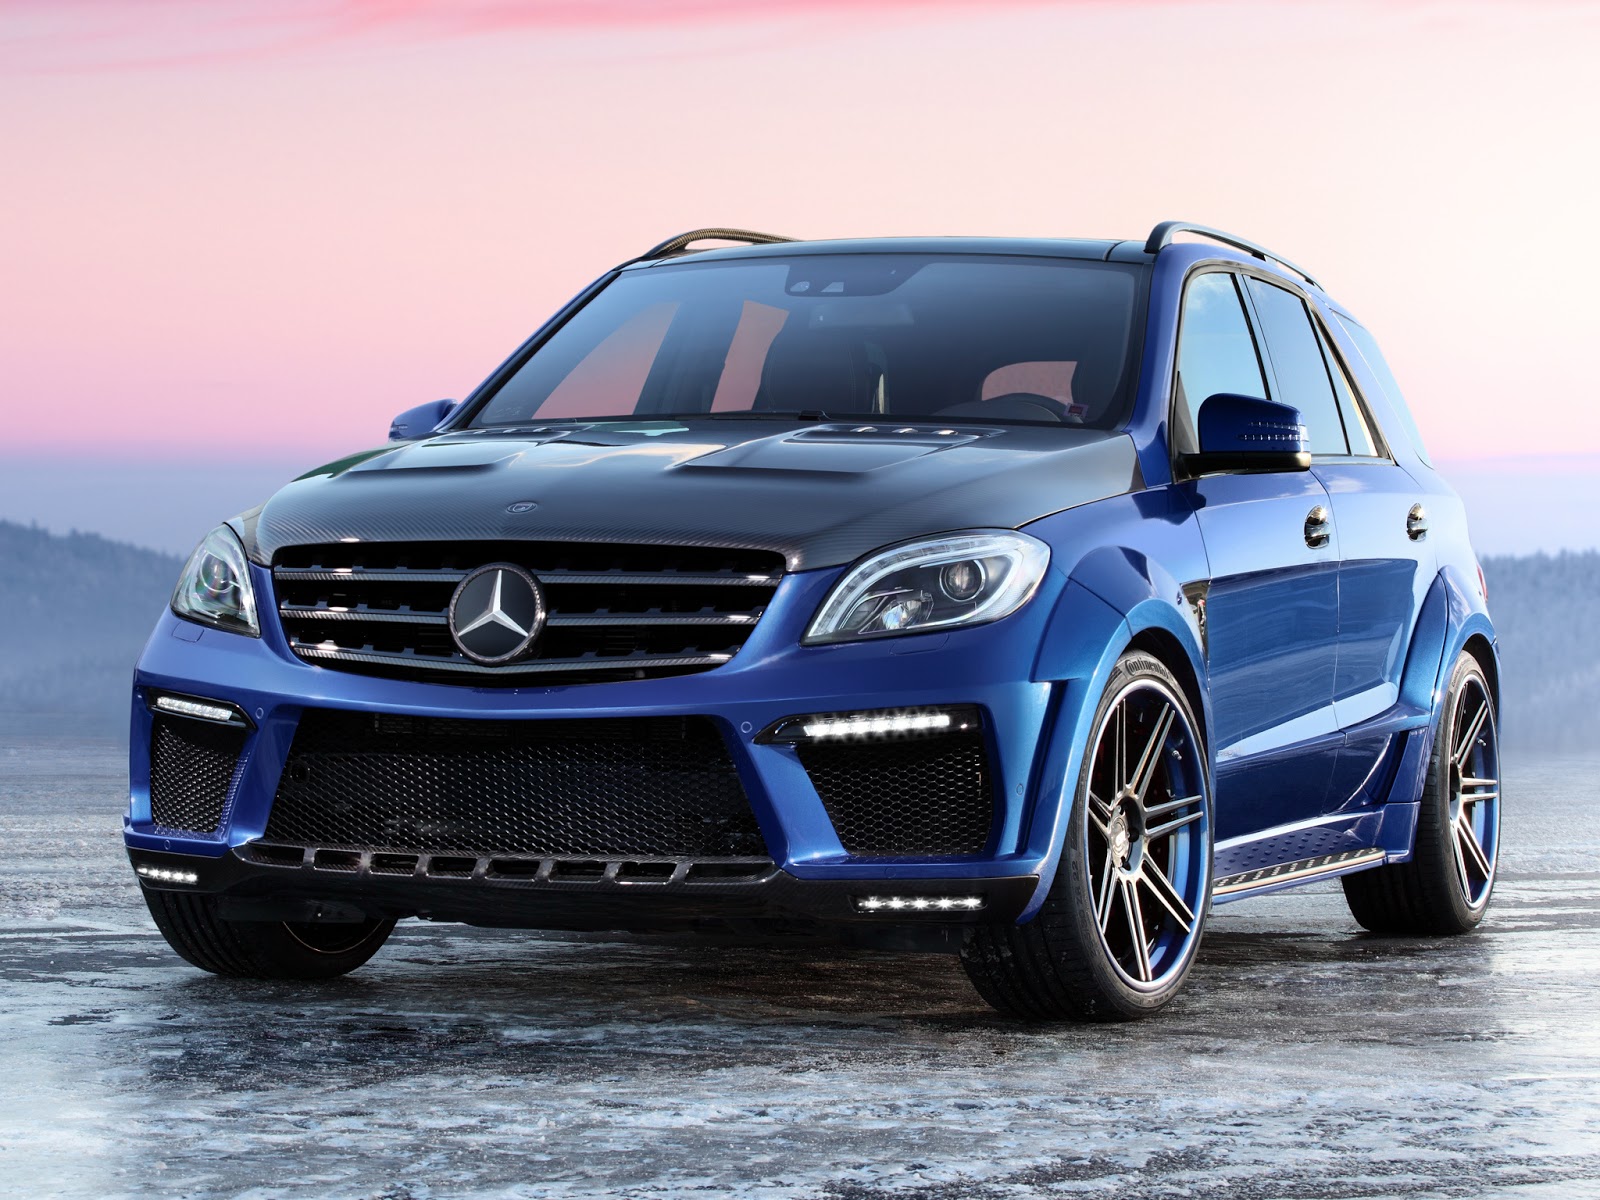 Wallpaper Name: Mercedes Benz SUV Wallpaper In Blue Best Resolution ...